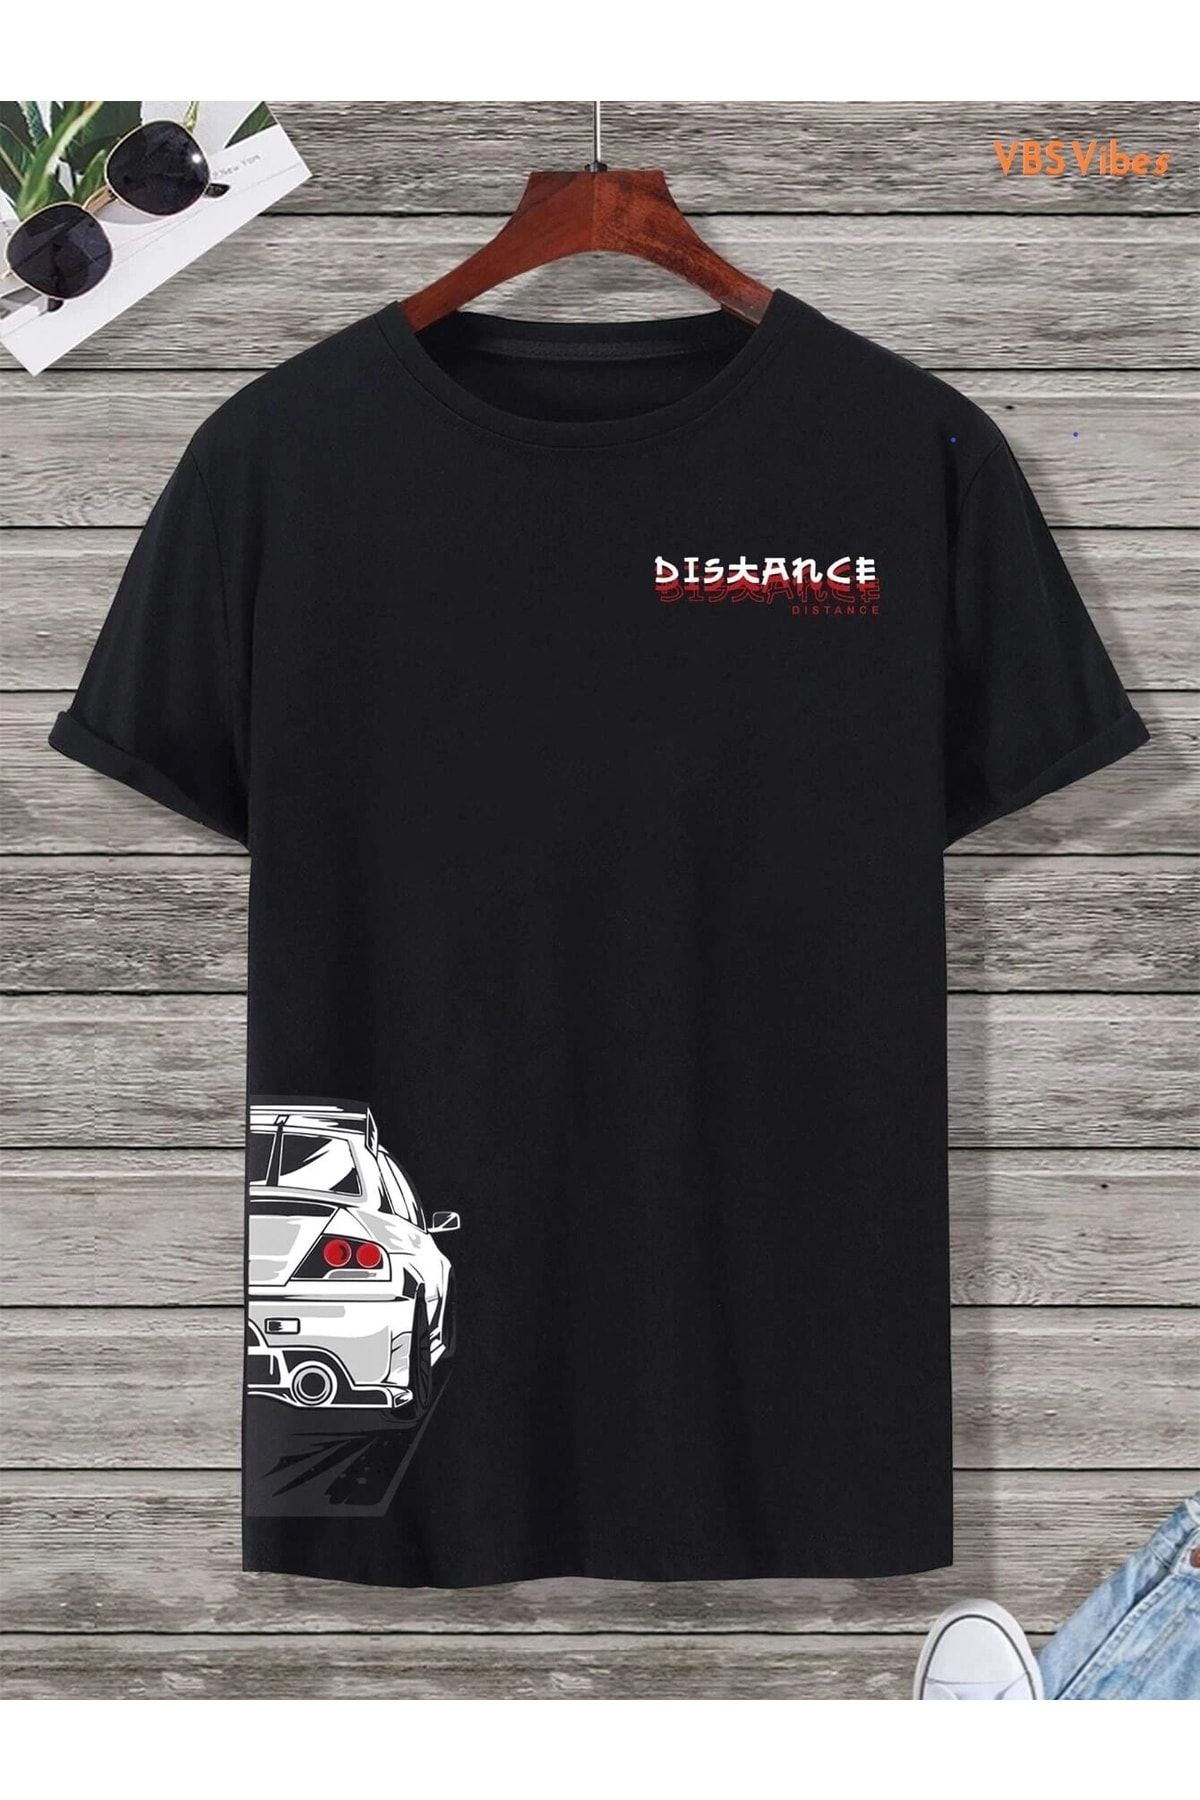 VBSVİBES Unisex Oversize Distance Baskılı Siyah T-shirt